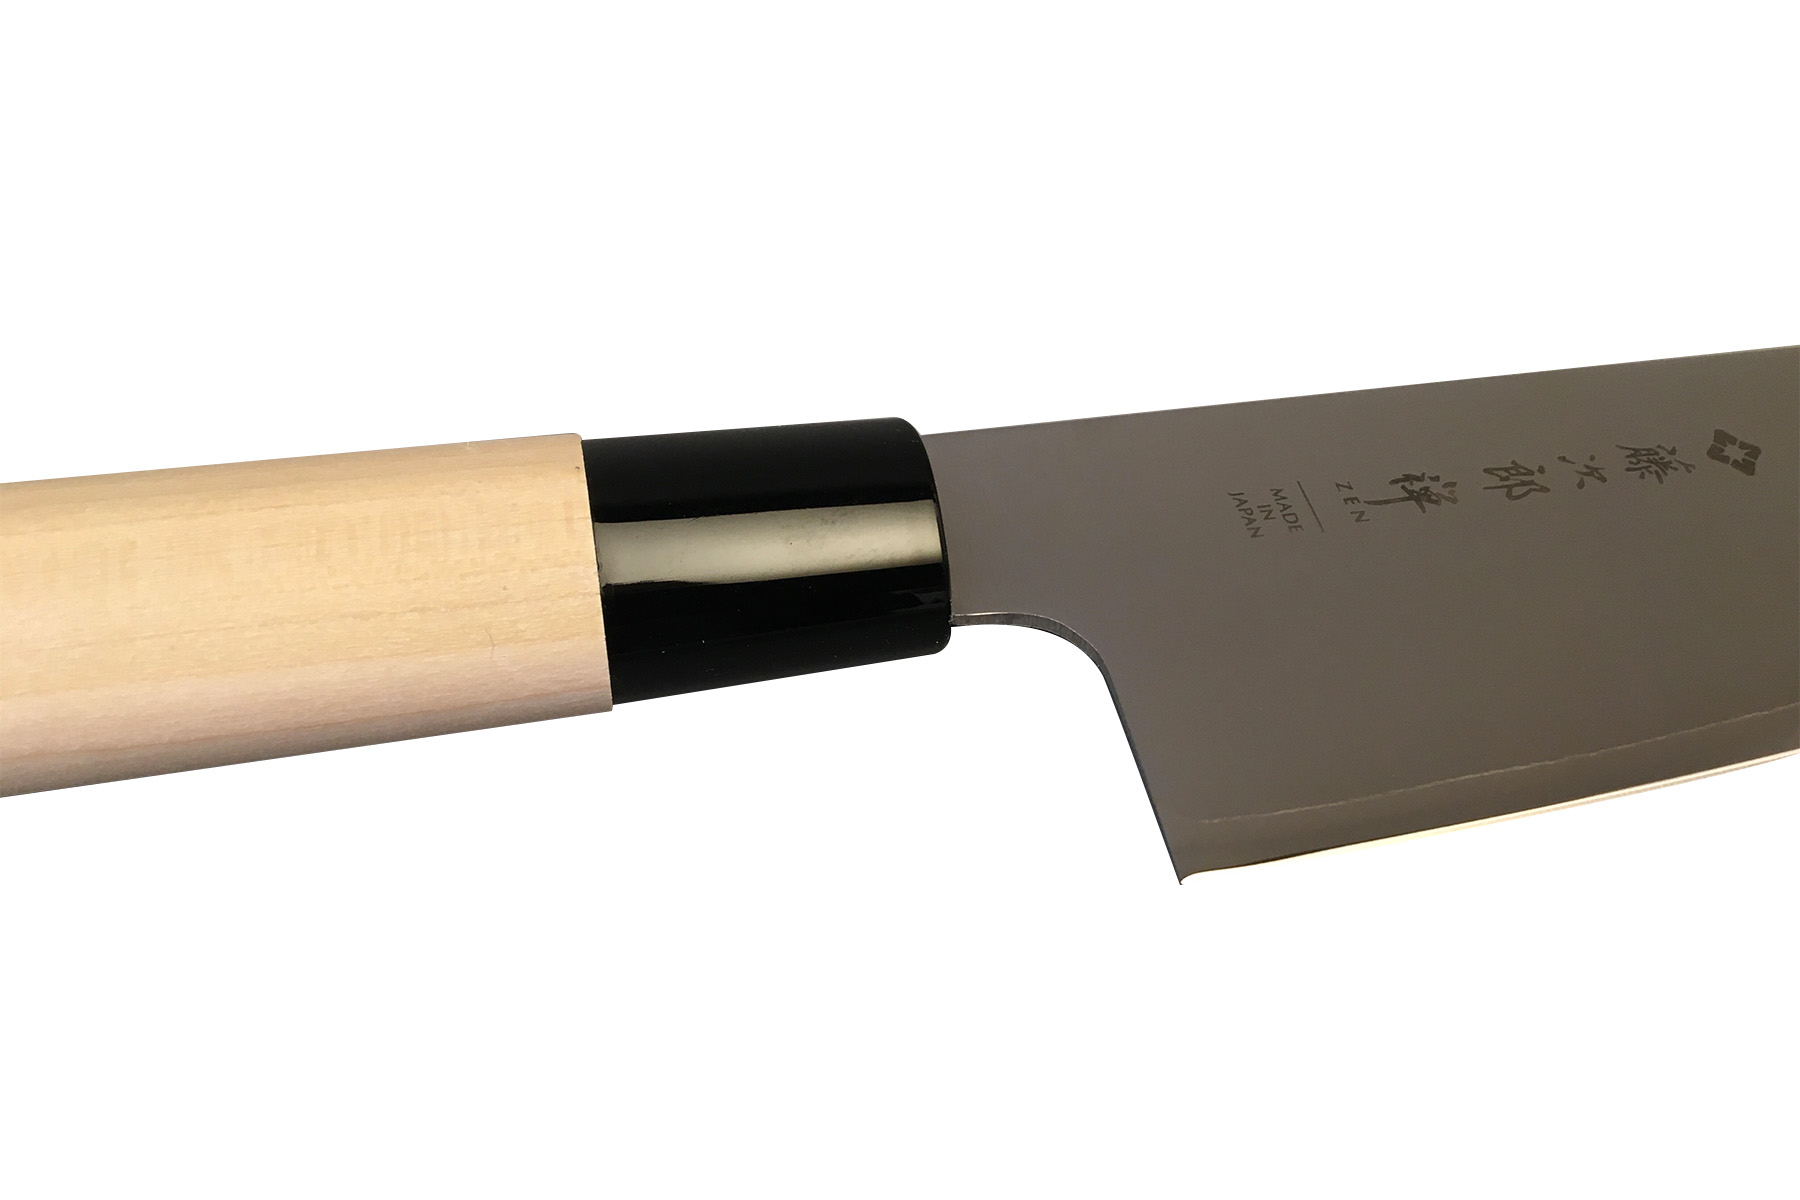 Couteau japonais Zen Tojiro Santoku 16 cm